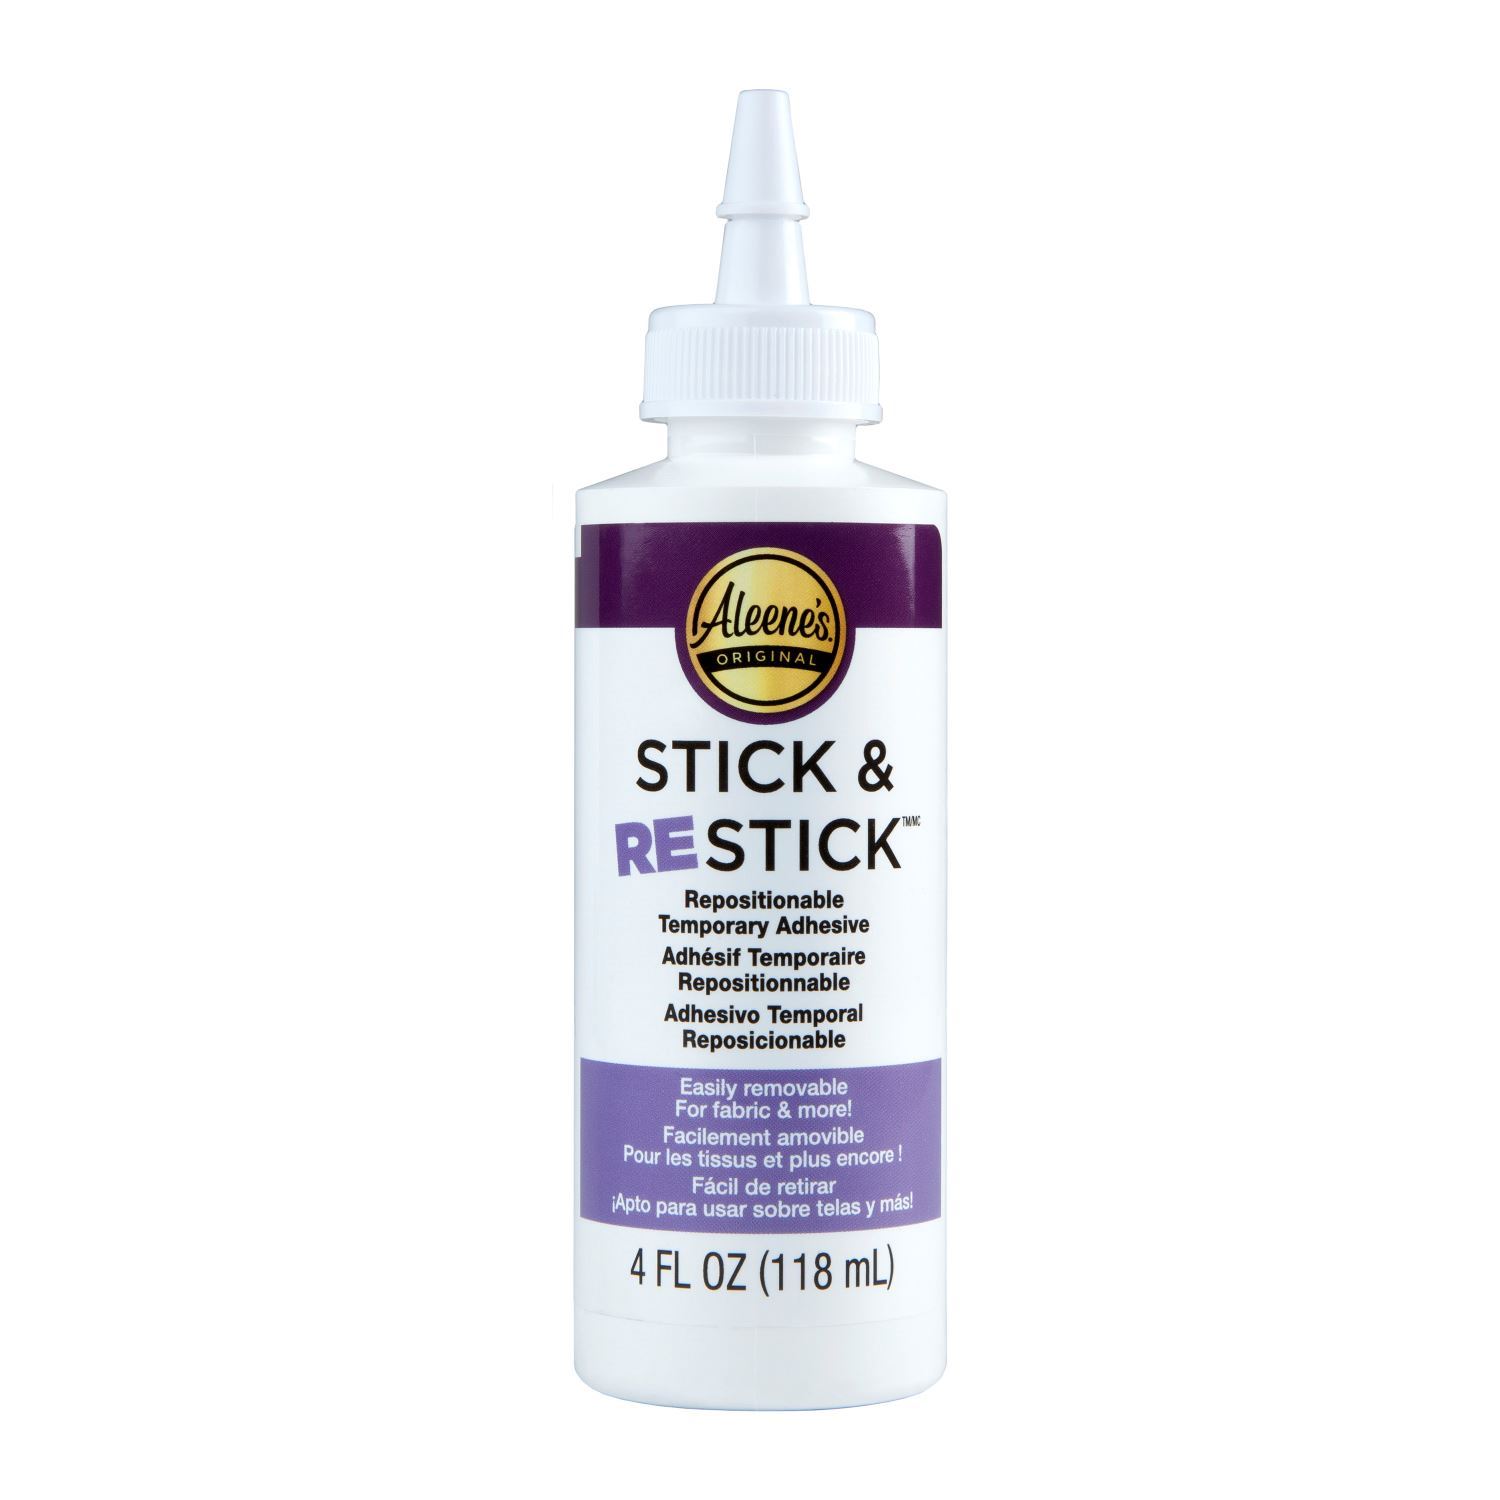 (3) repositionable Stencil adhesive spray restick glue 1oz bottle